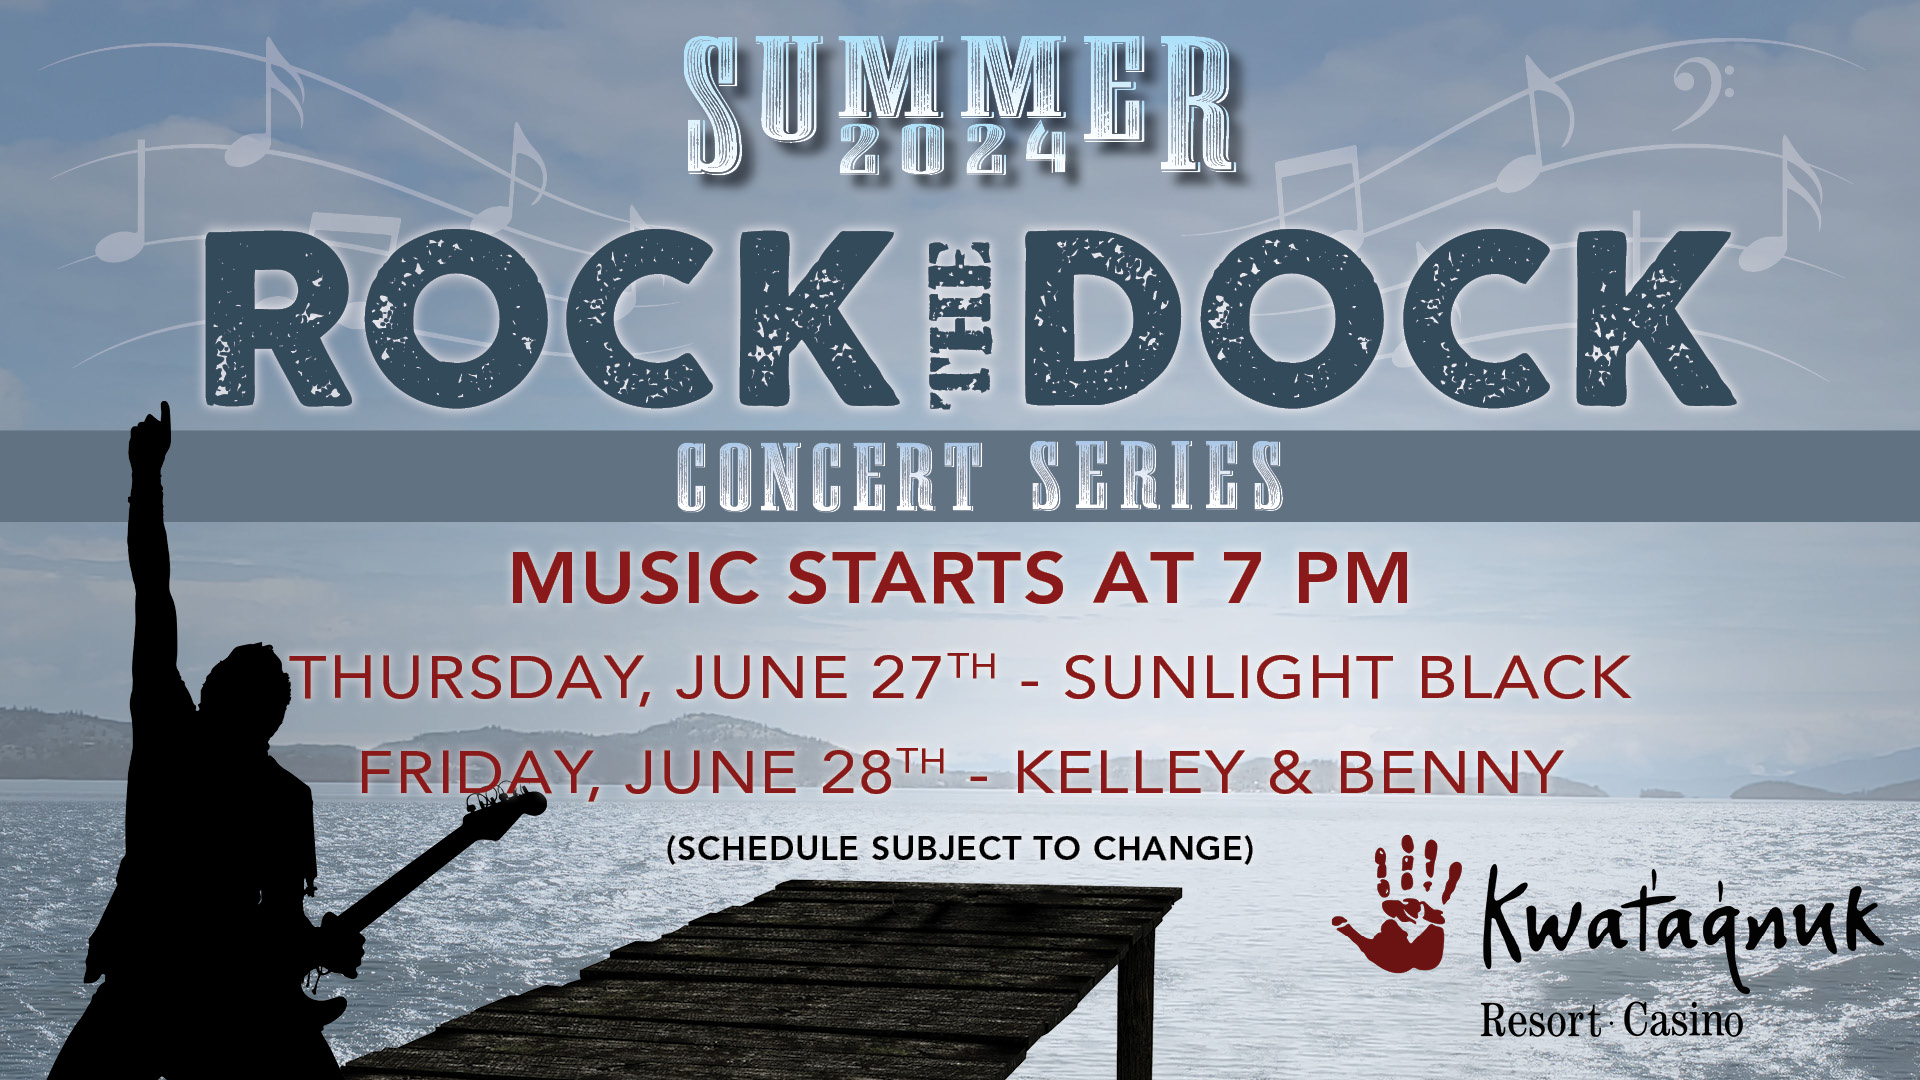 Rock the Dock, Summer Concert Series, Kelley & Benny, live music, rock the dock concert, outdoor concert, patio event